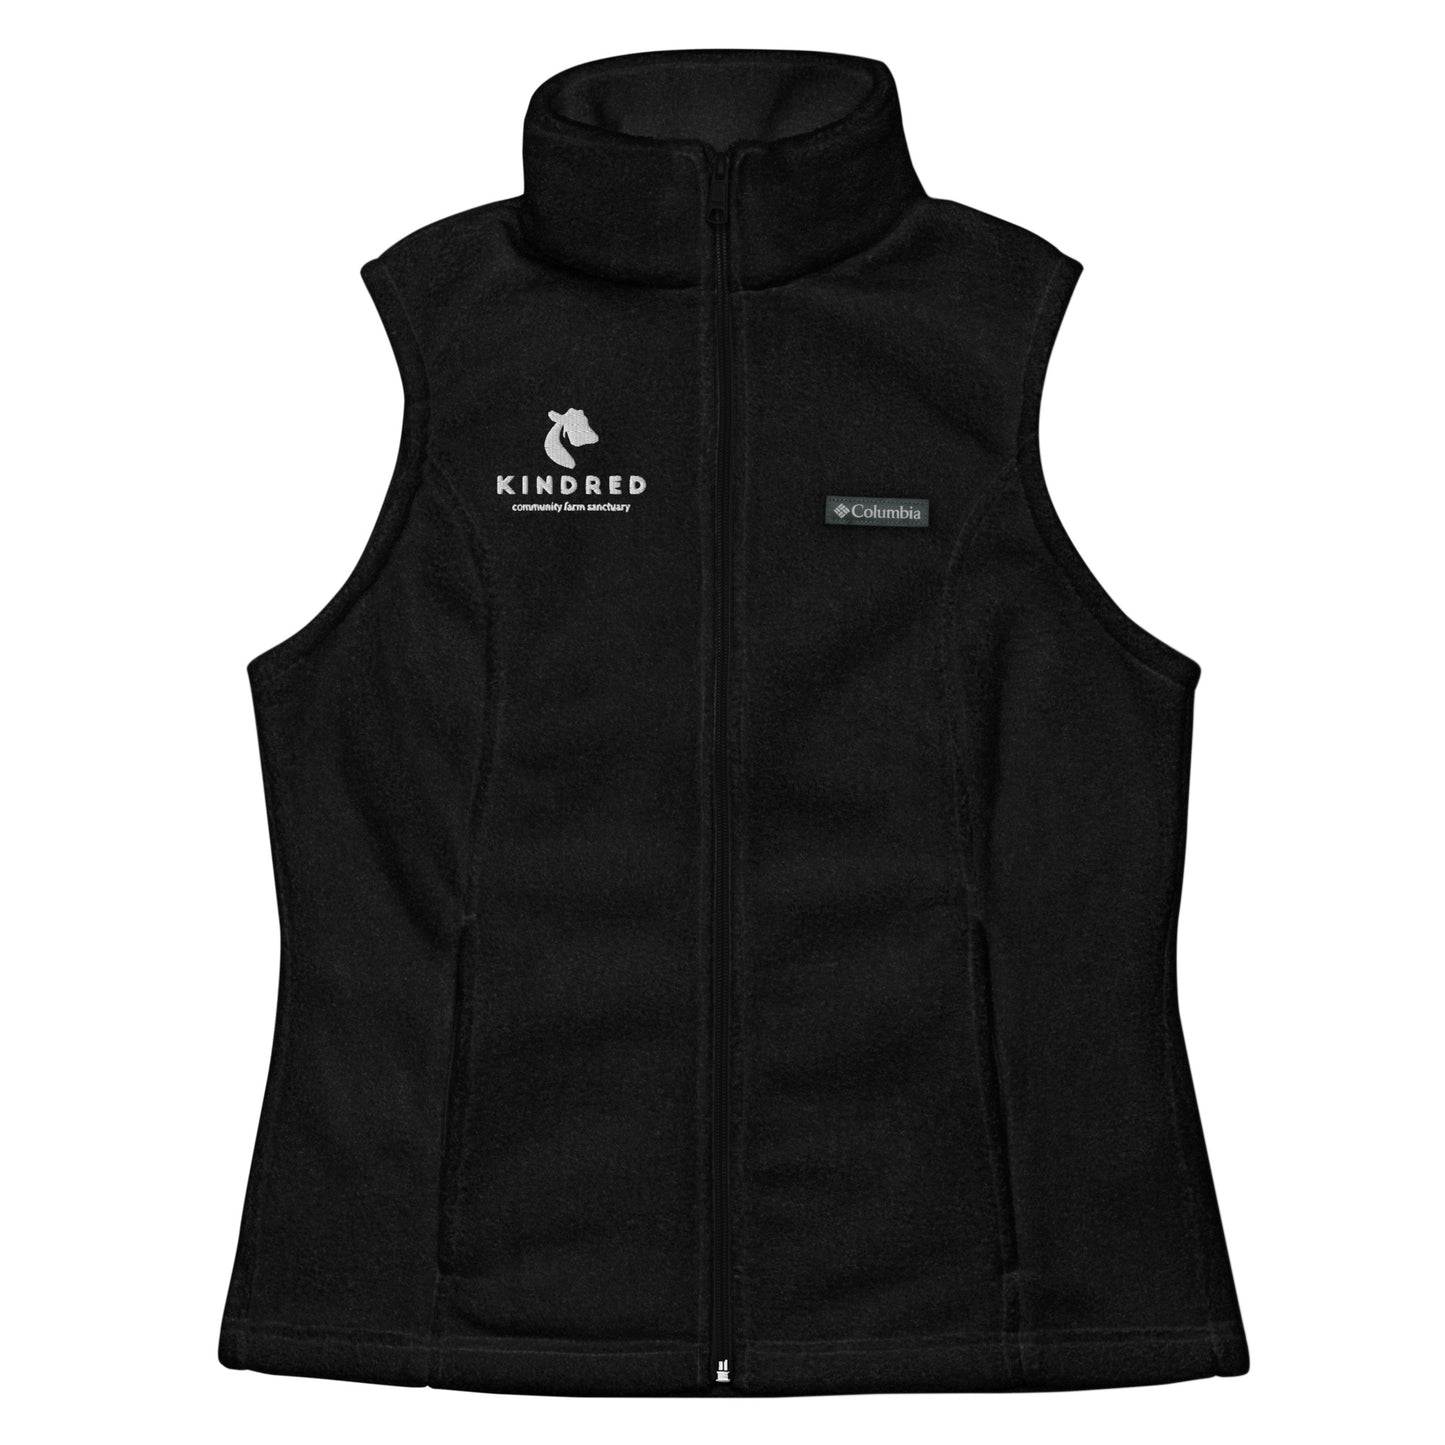 Women’s Columbia fleece vest - Donates $10